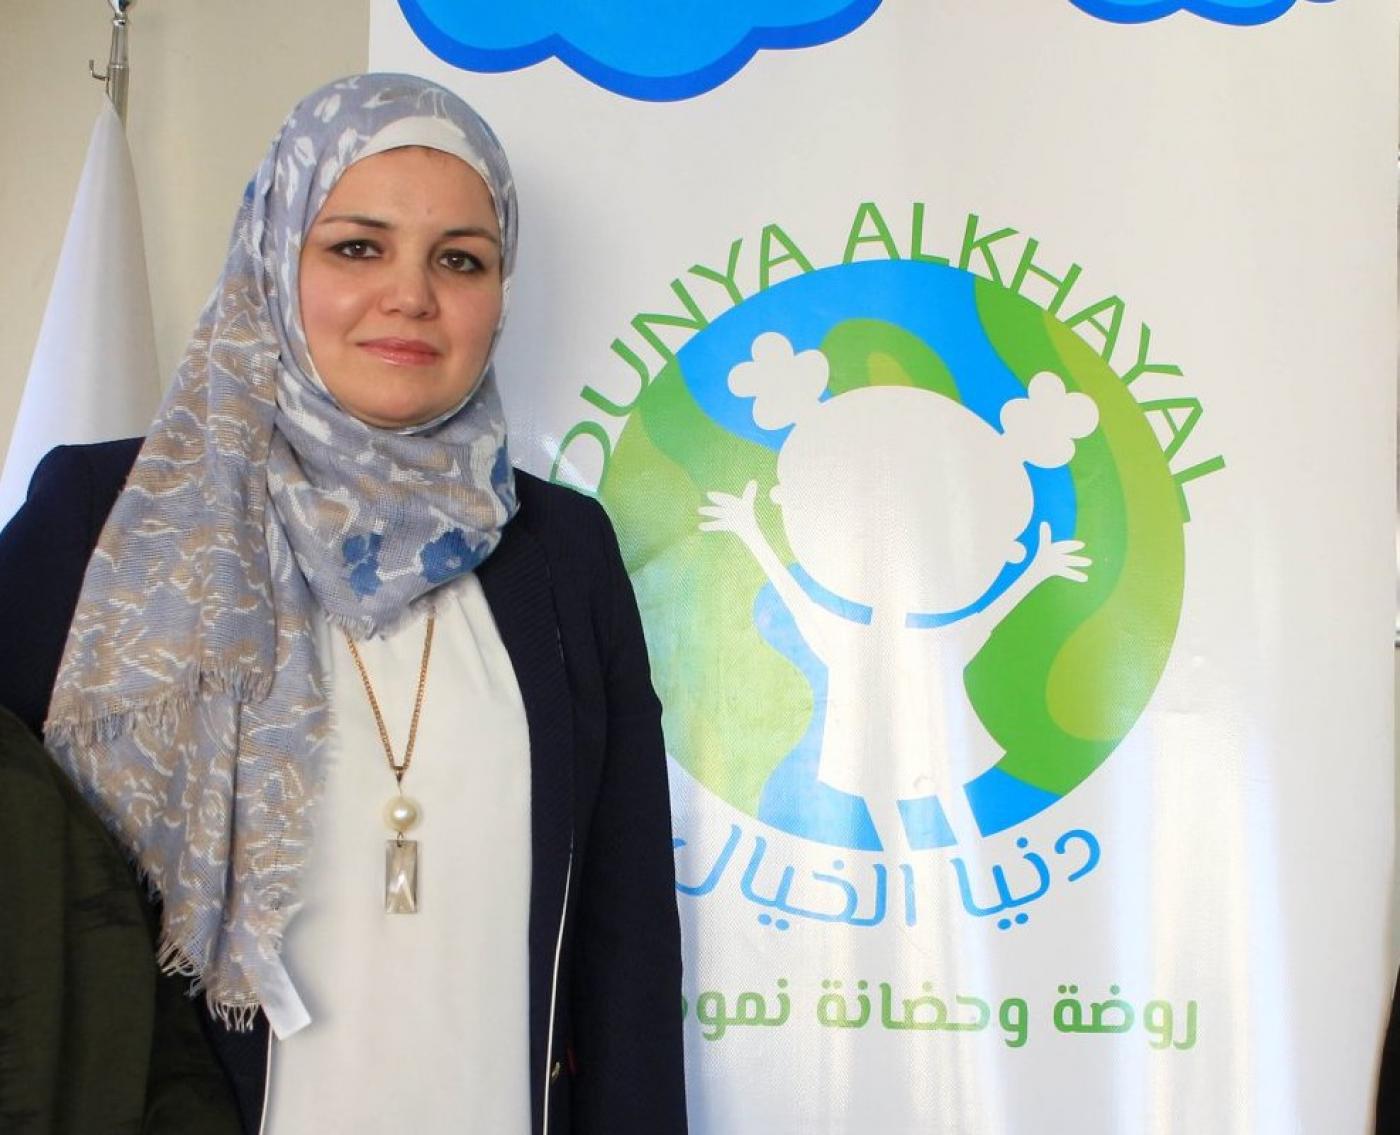 Dania Abdulbaqi is the founder of the daycare centre Dunya al-Khayal, Arabic for 'Wonder World', in Gaziantep, Turkey (Dania Abdulbaqi)